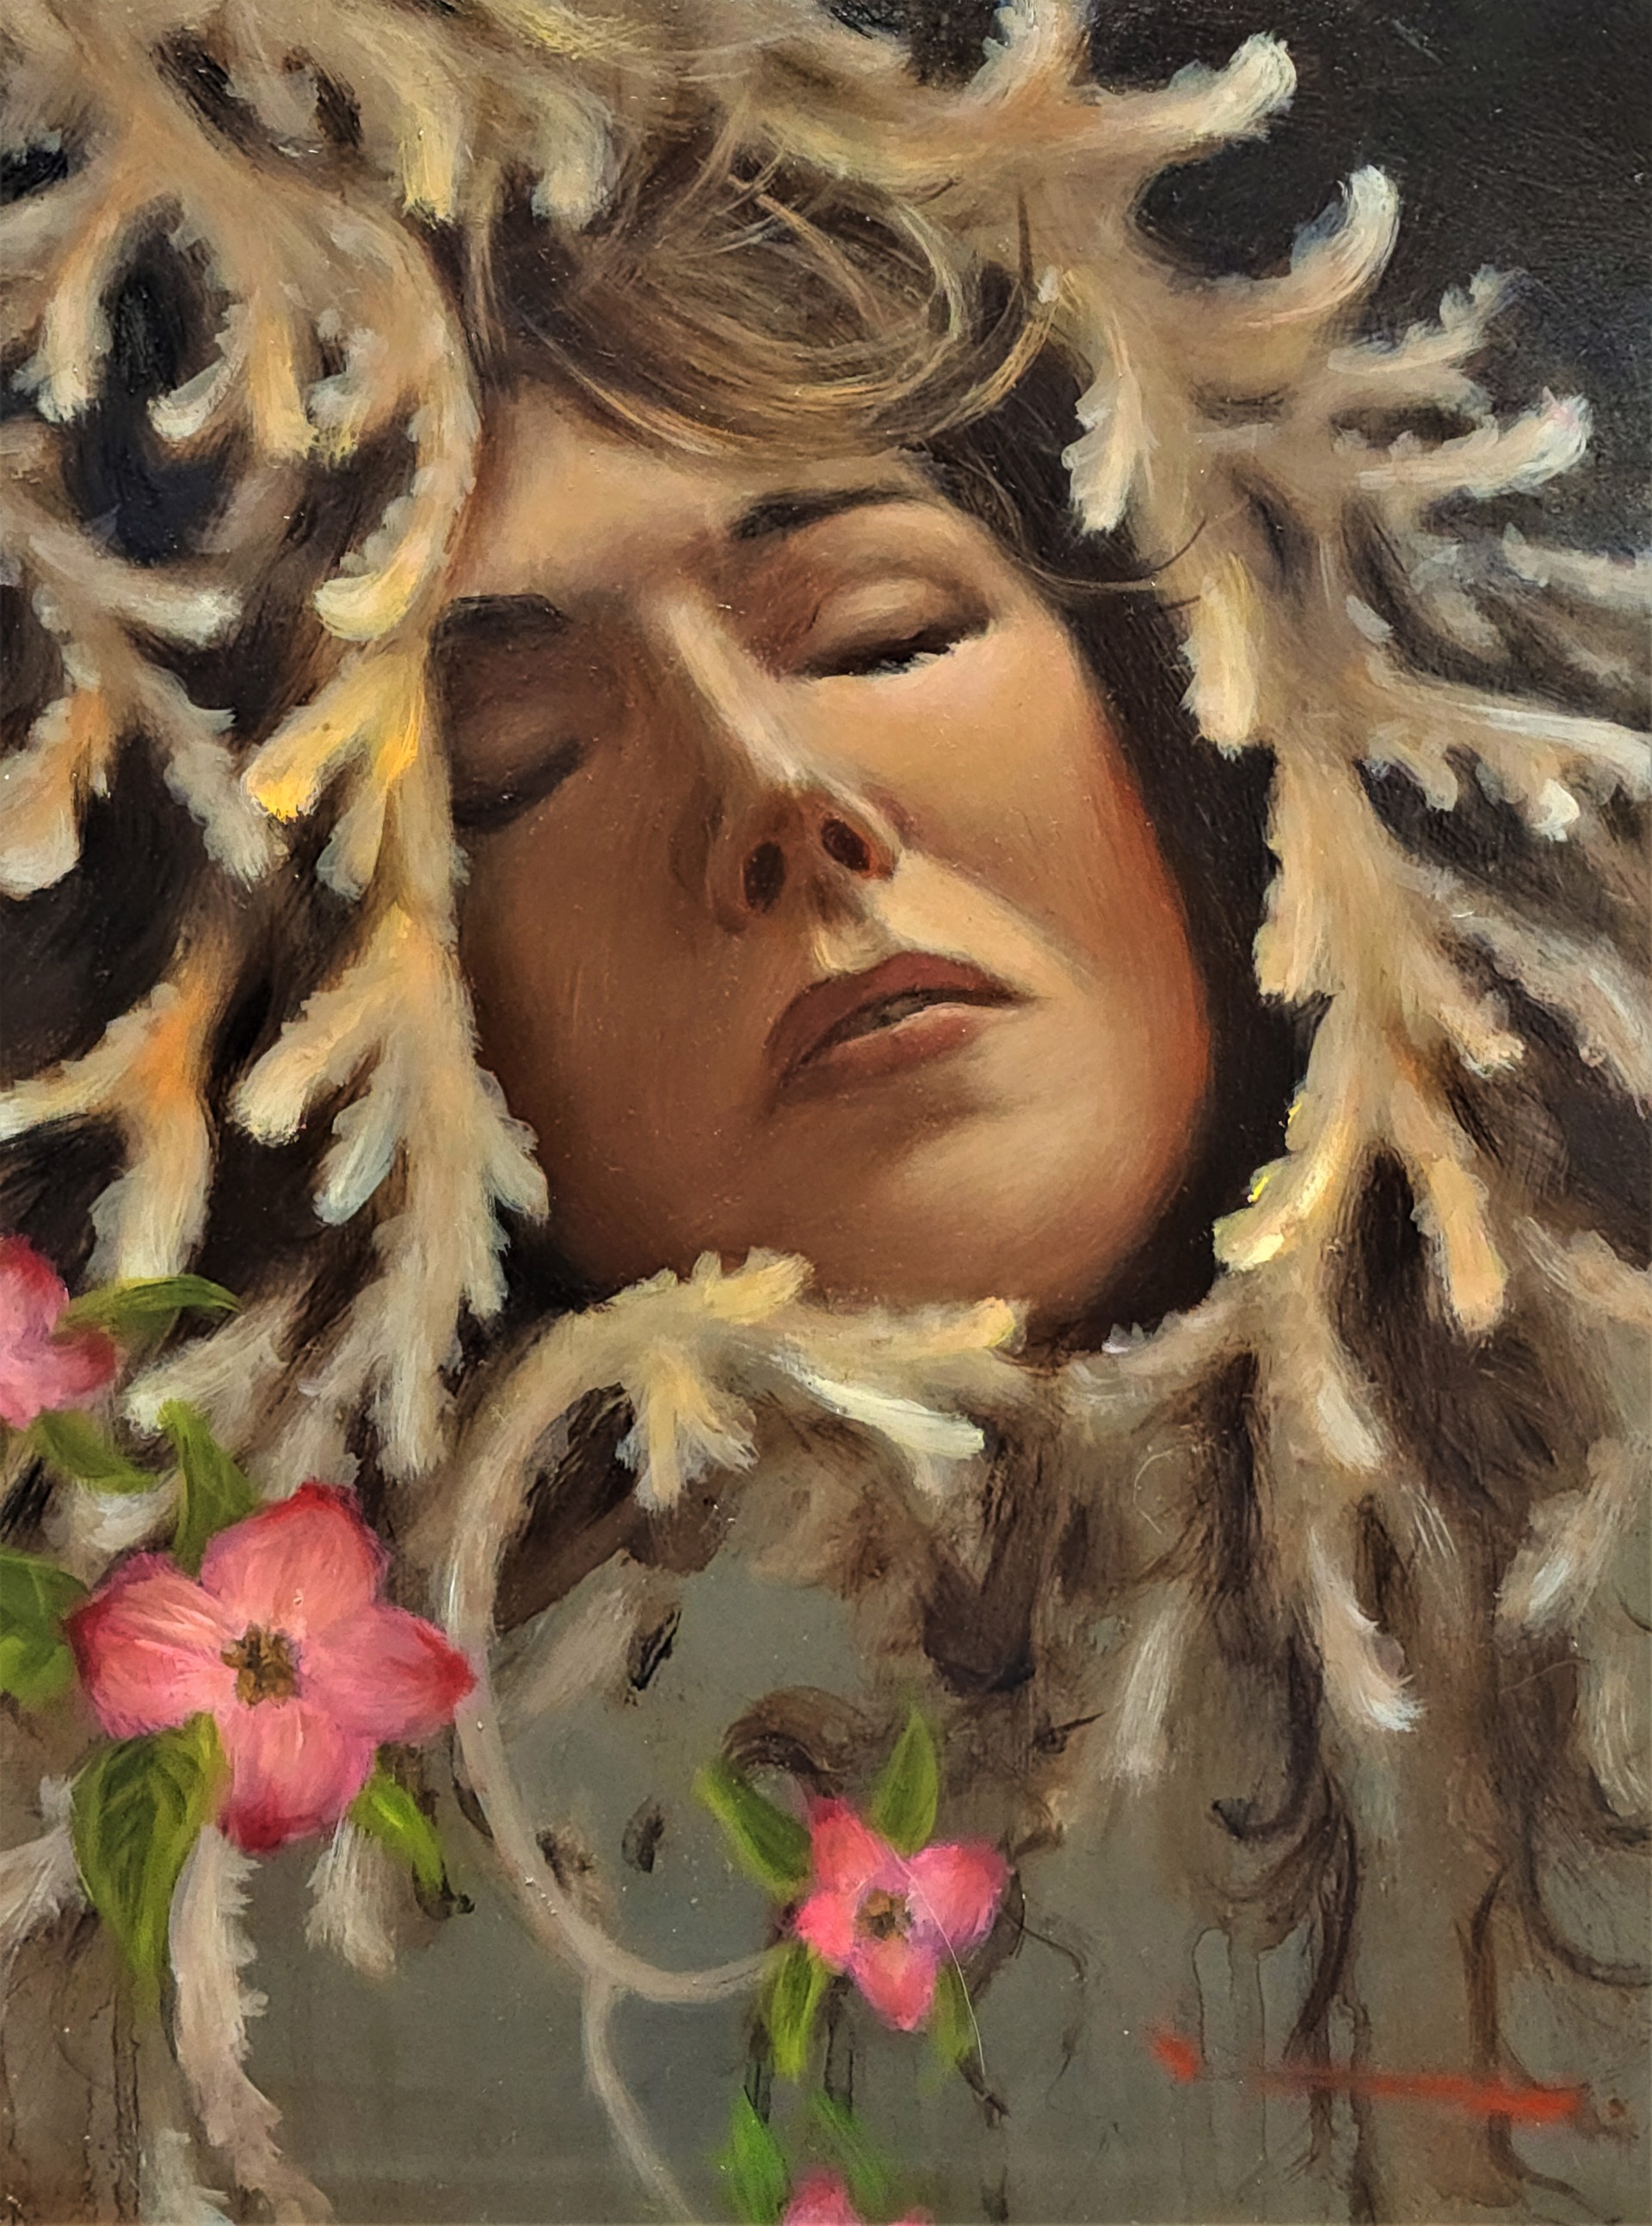 Sleeping Beauty - Study by Mark Larson